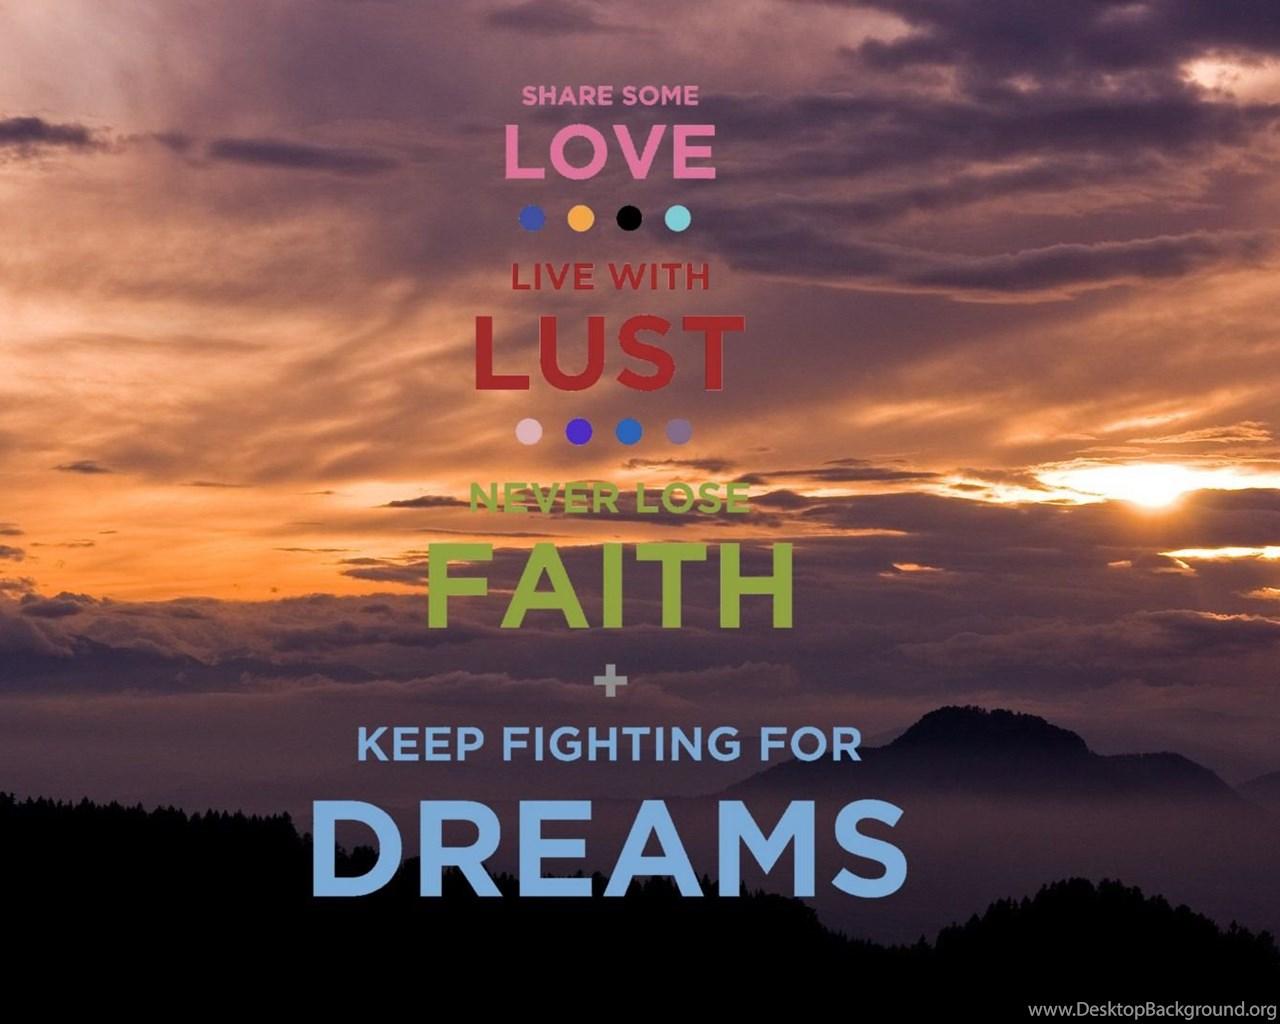 LOVE LUST FAITH + DREAMS Wallpaper By BRSCardino96